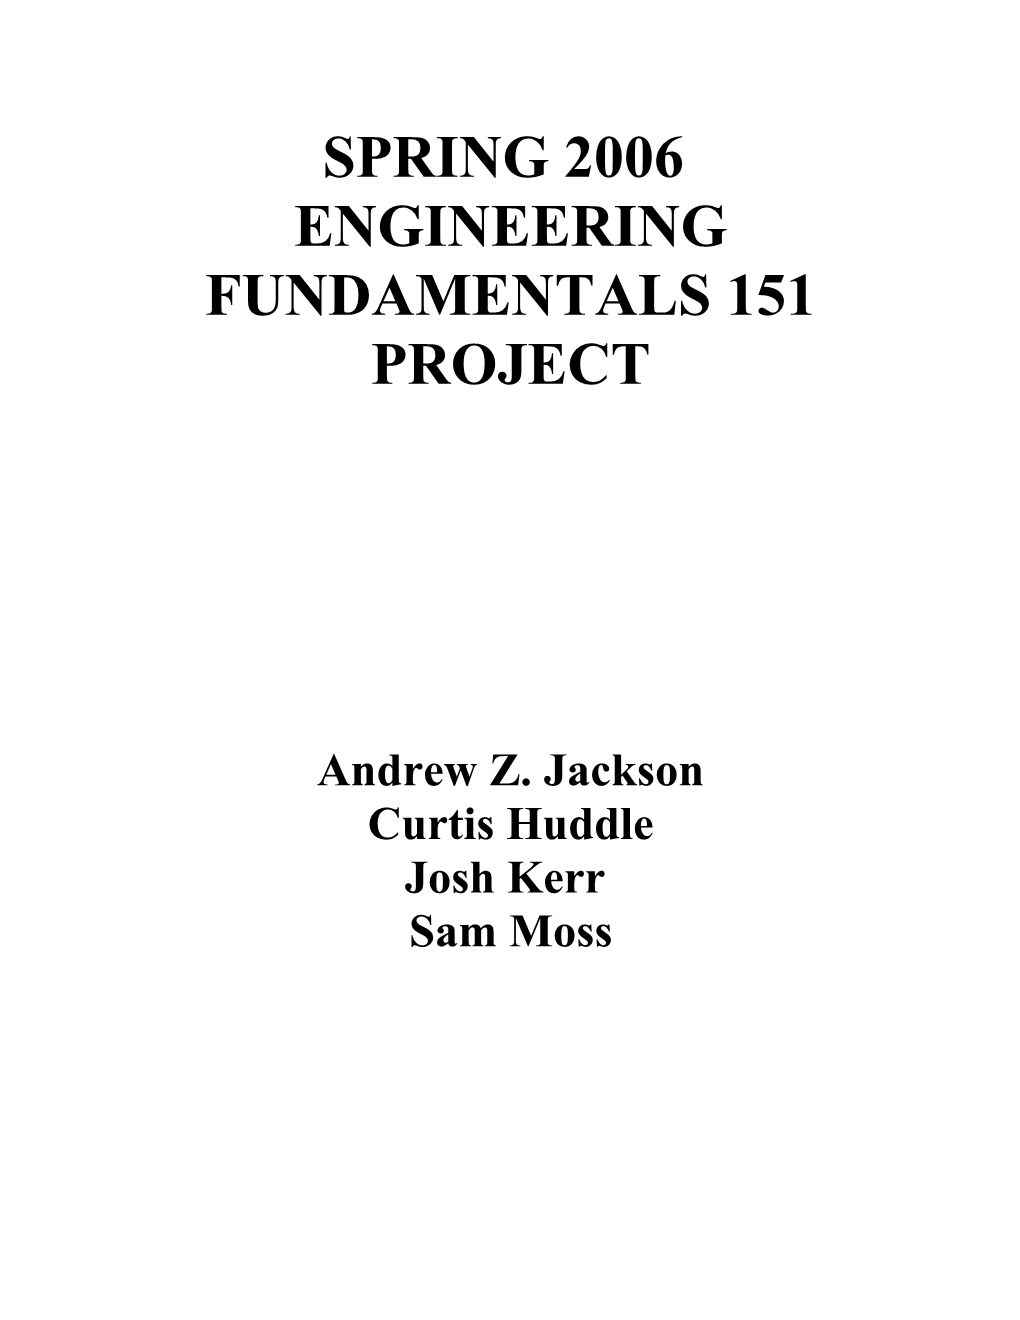 Engineering Fundamentals 151 Project